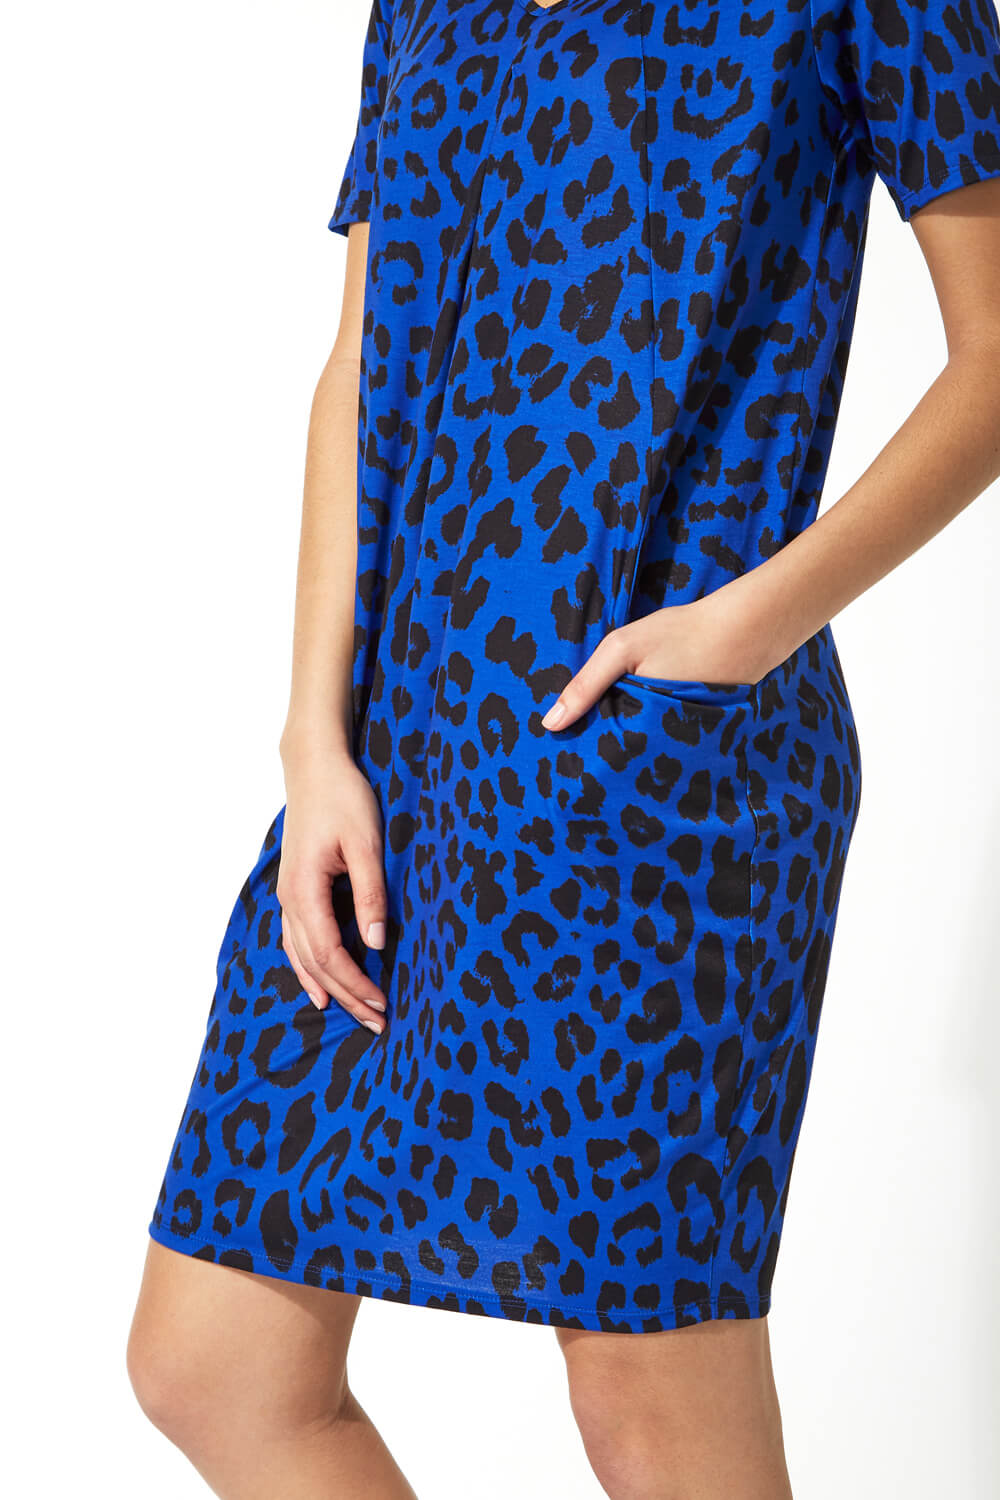 Royal Blue Animal Leopard Print Dress, Image 4 of 5